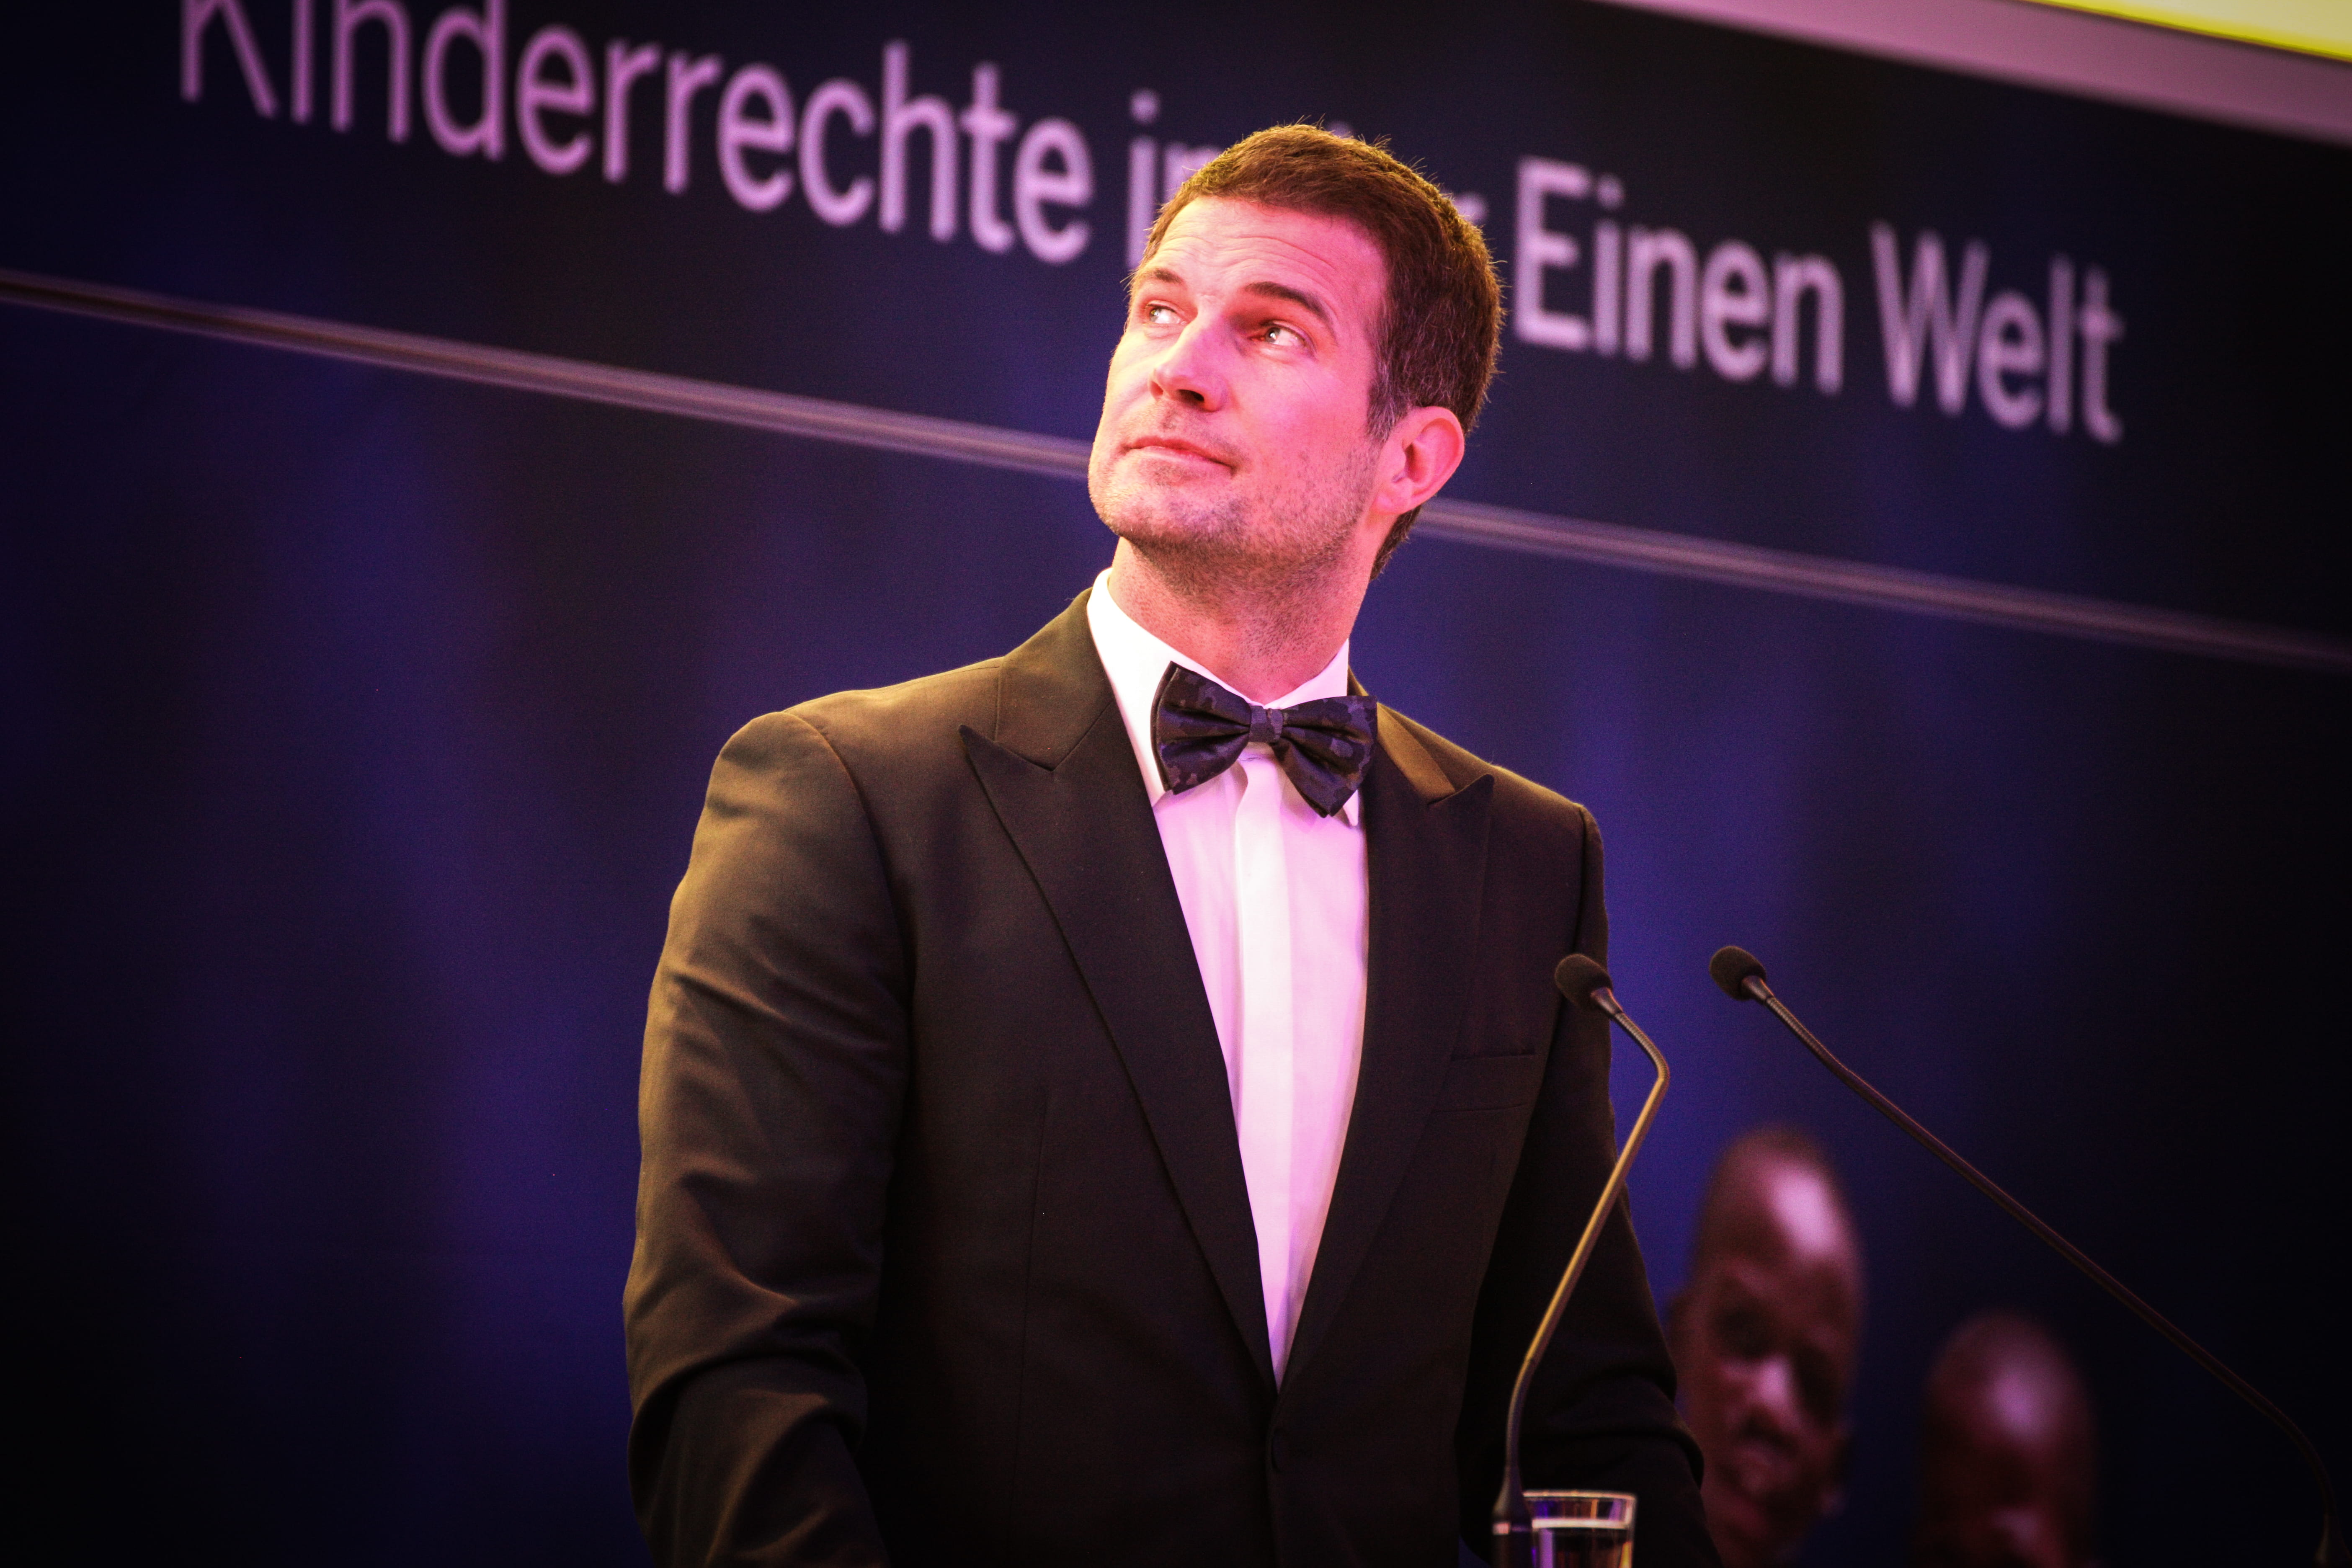 Simon Böer am Rednerpult beim Medienpreis 2015 in Berlin